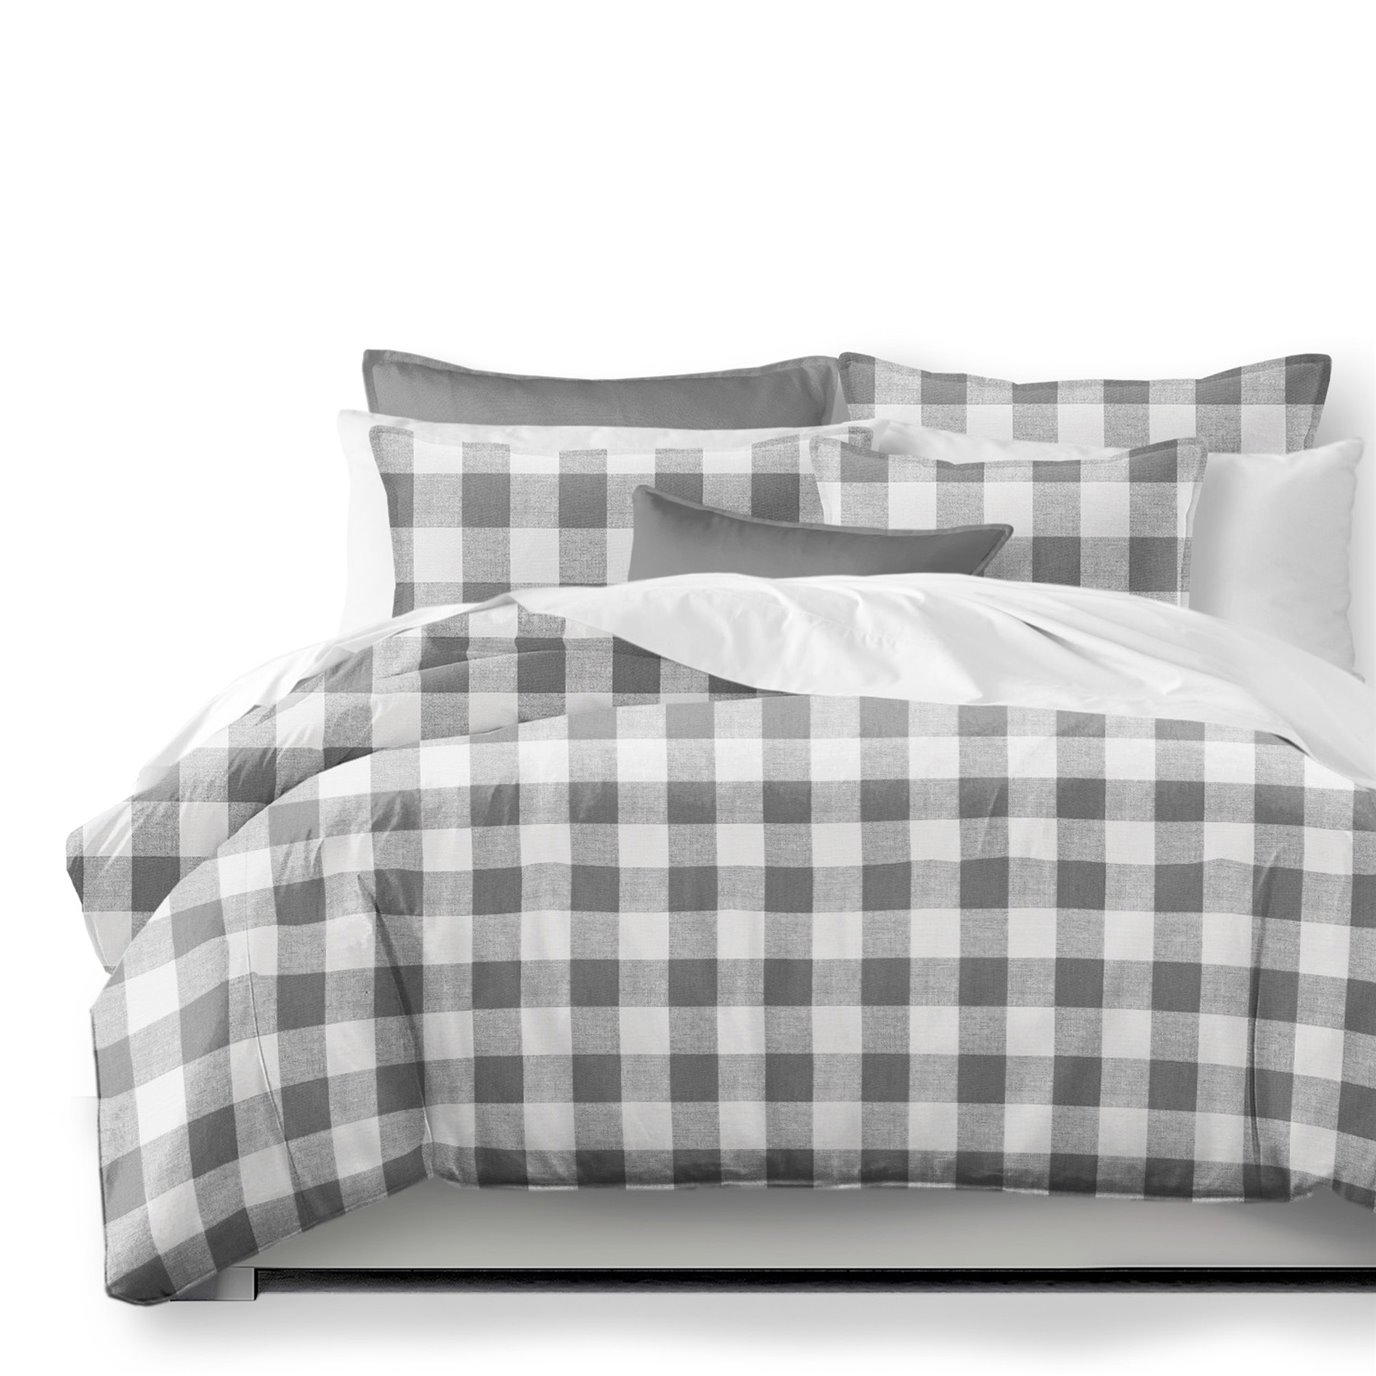 Lumberjack Check Gray/White Comforter and Pillow Sham(s) Set - Size Twin